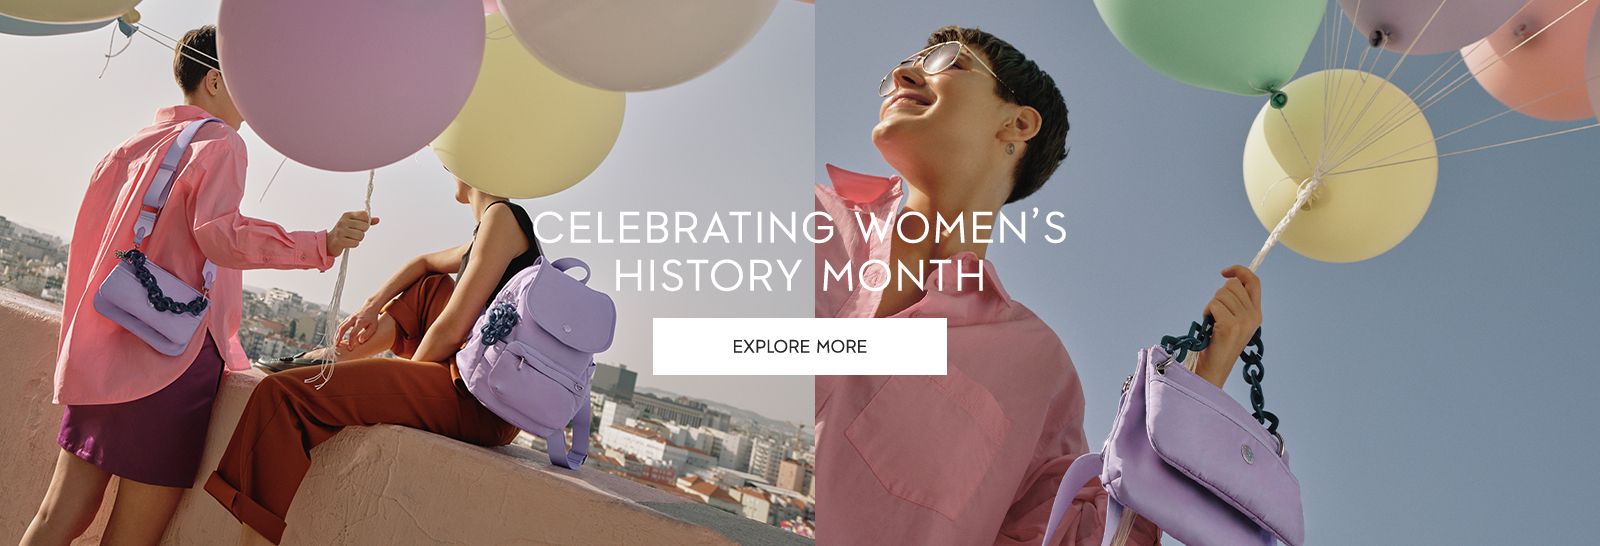 Celebrating women’s history month